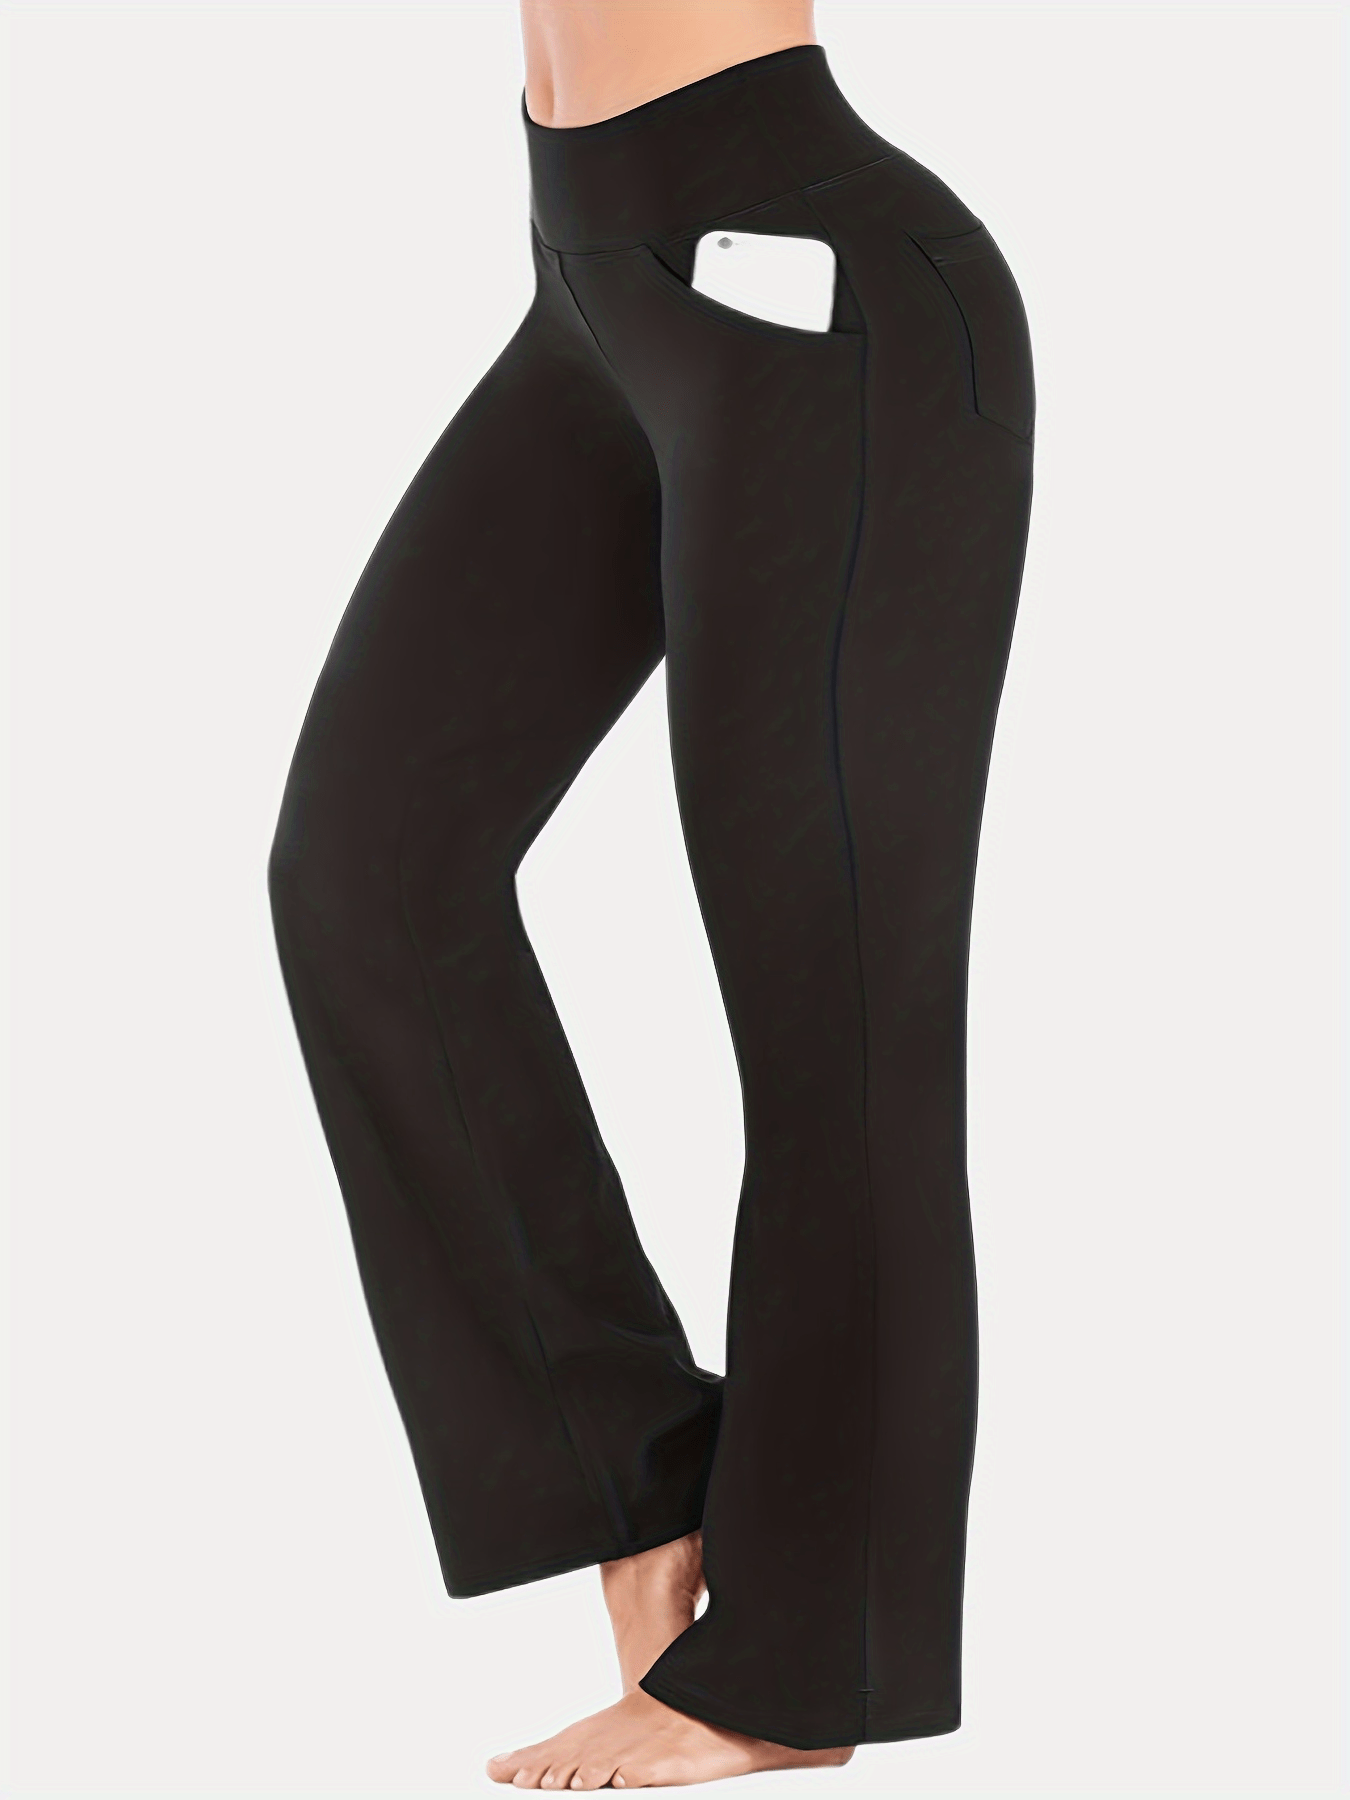 Yoga Tokong Pants for PLUS SIZE Women [TENESSY] - Medium to XL